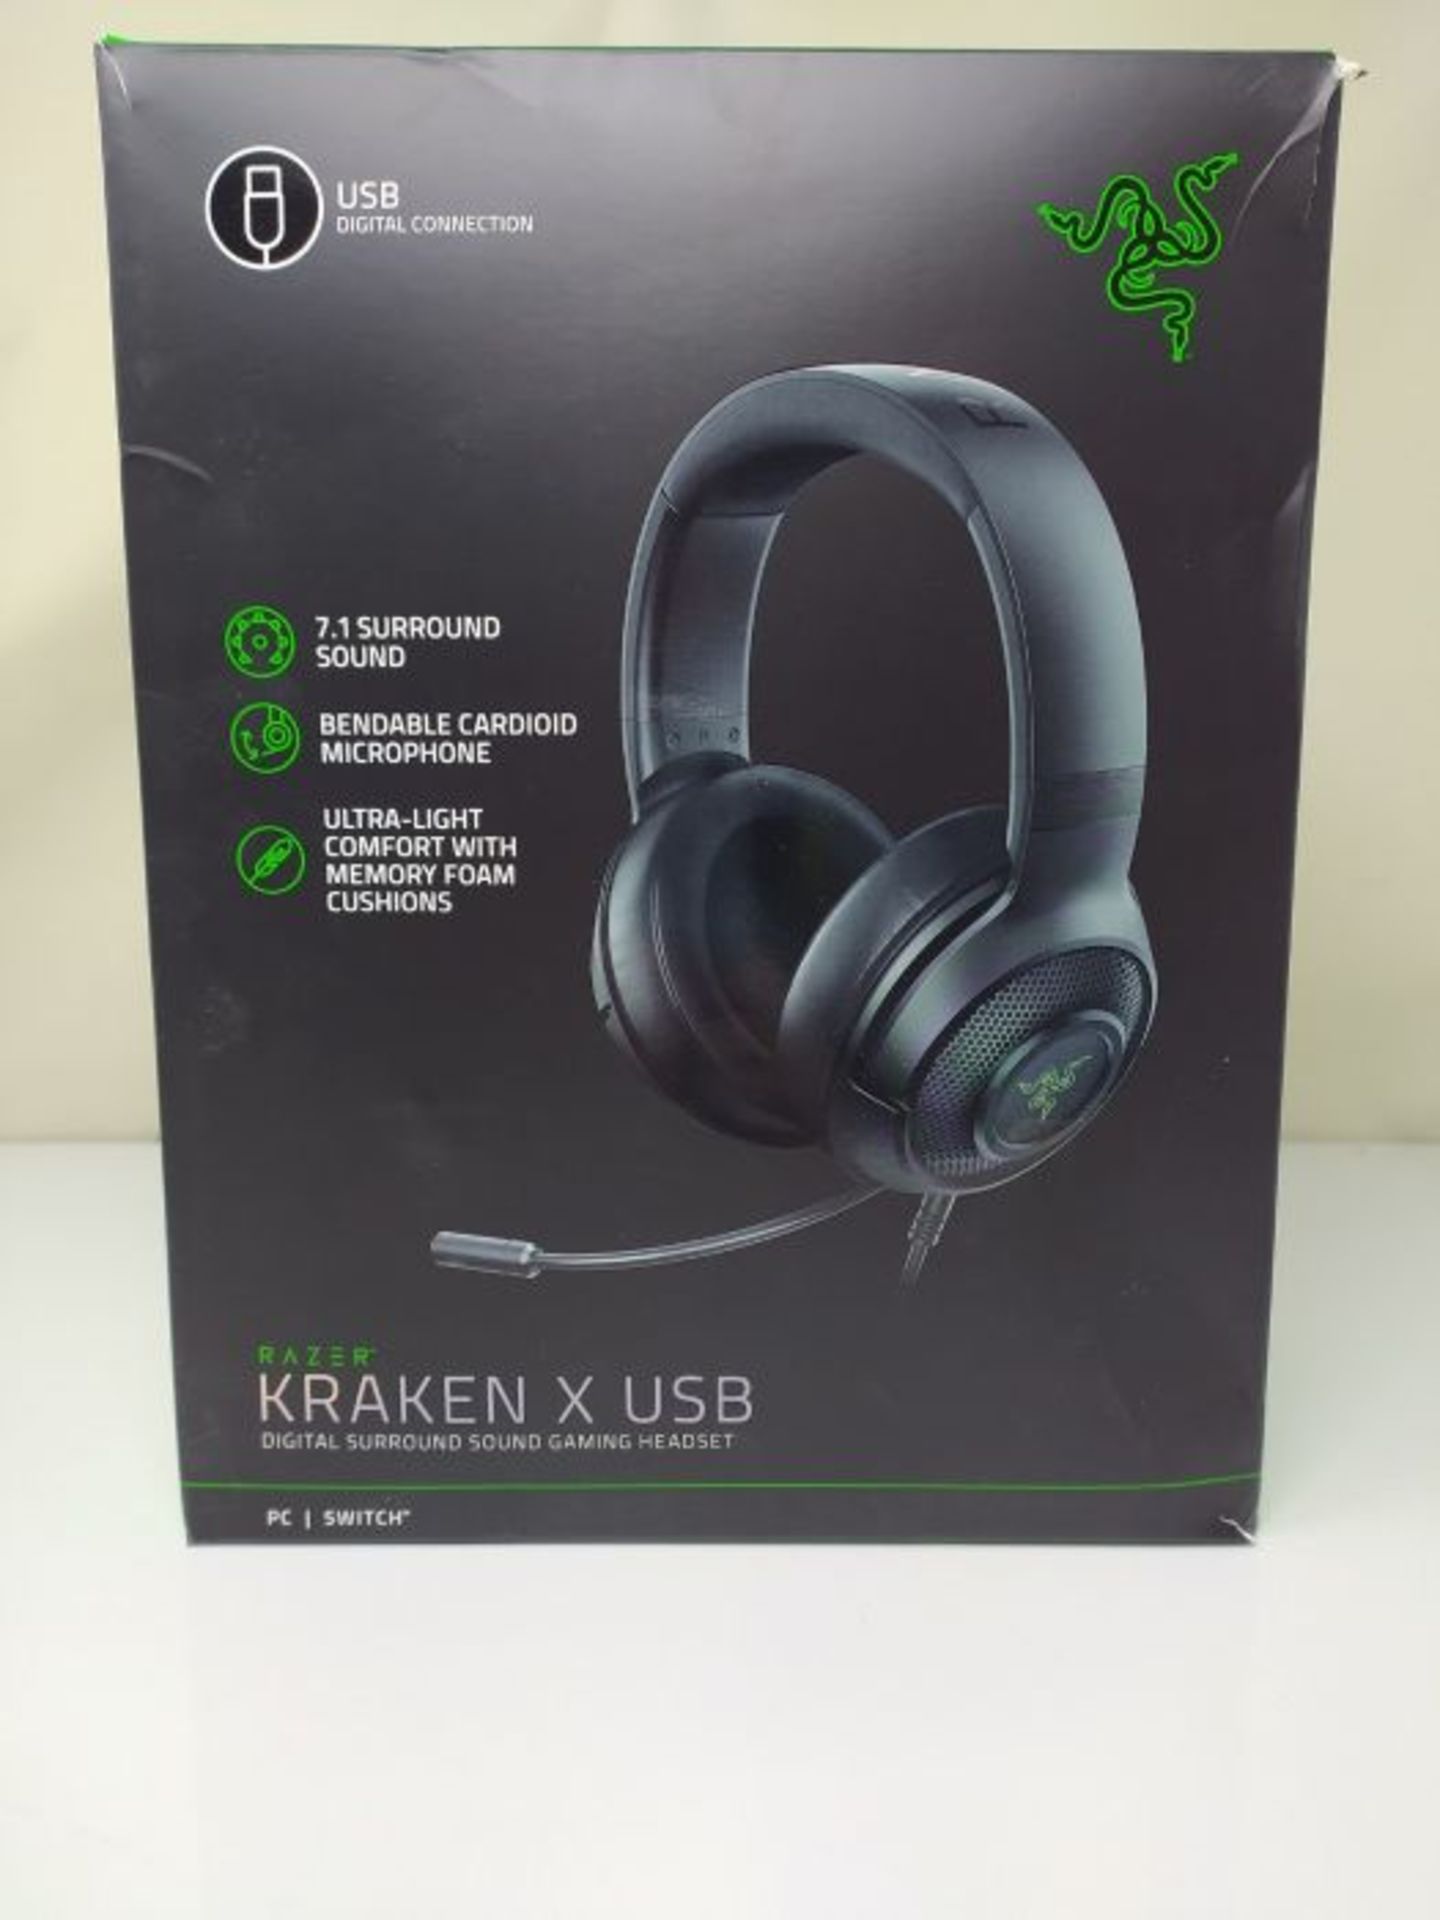 Razer Kraken X USB Digital Surround Sound Gaming Headset - Ultra-Light Comfort - Image 2 of 3